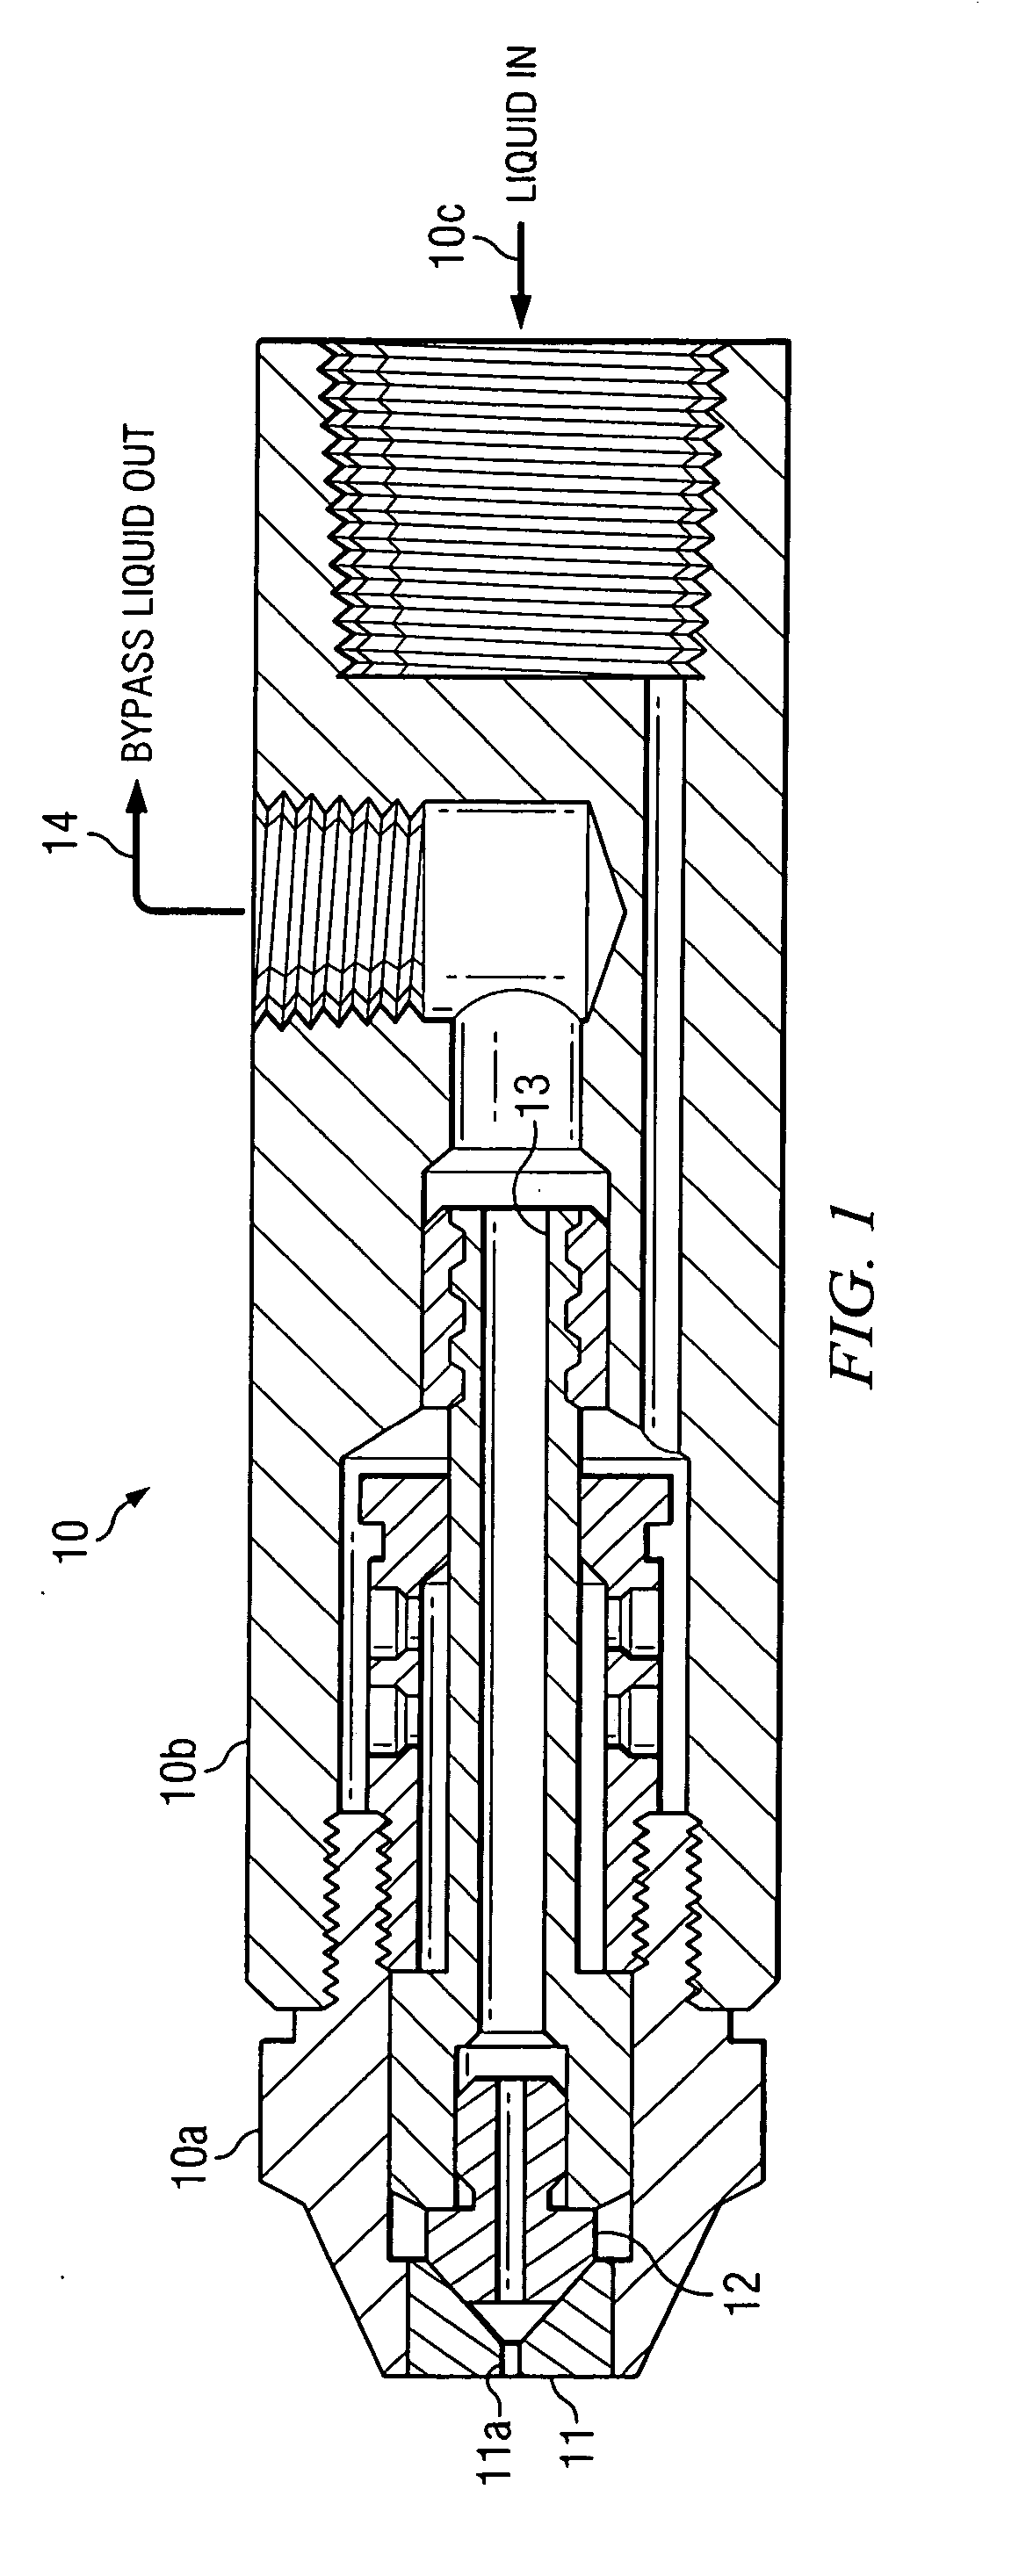 Atomizer cooling by liquid circulation through atomizer tip holder